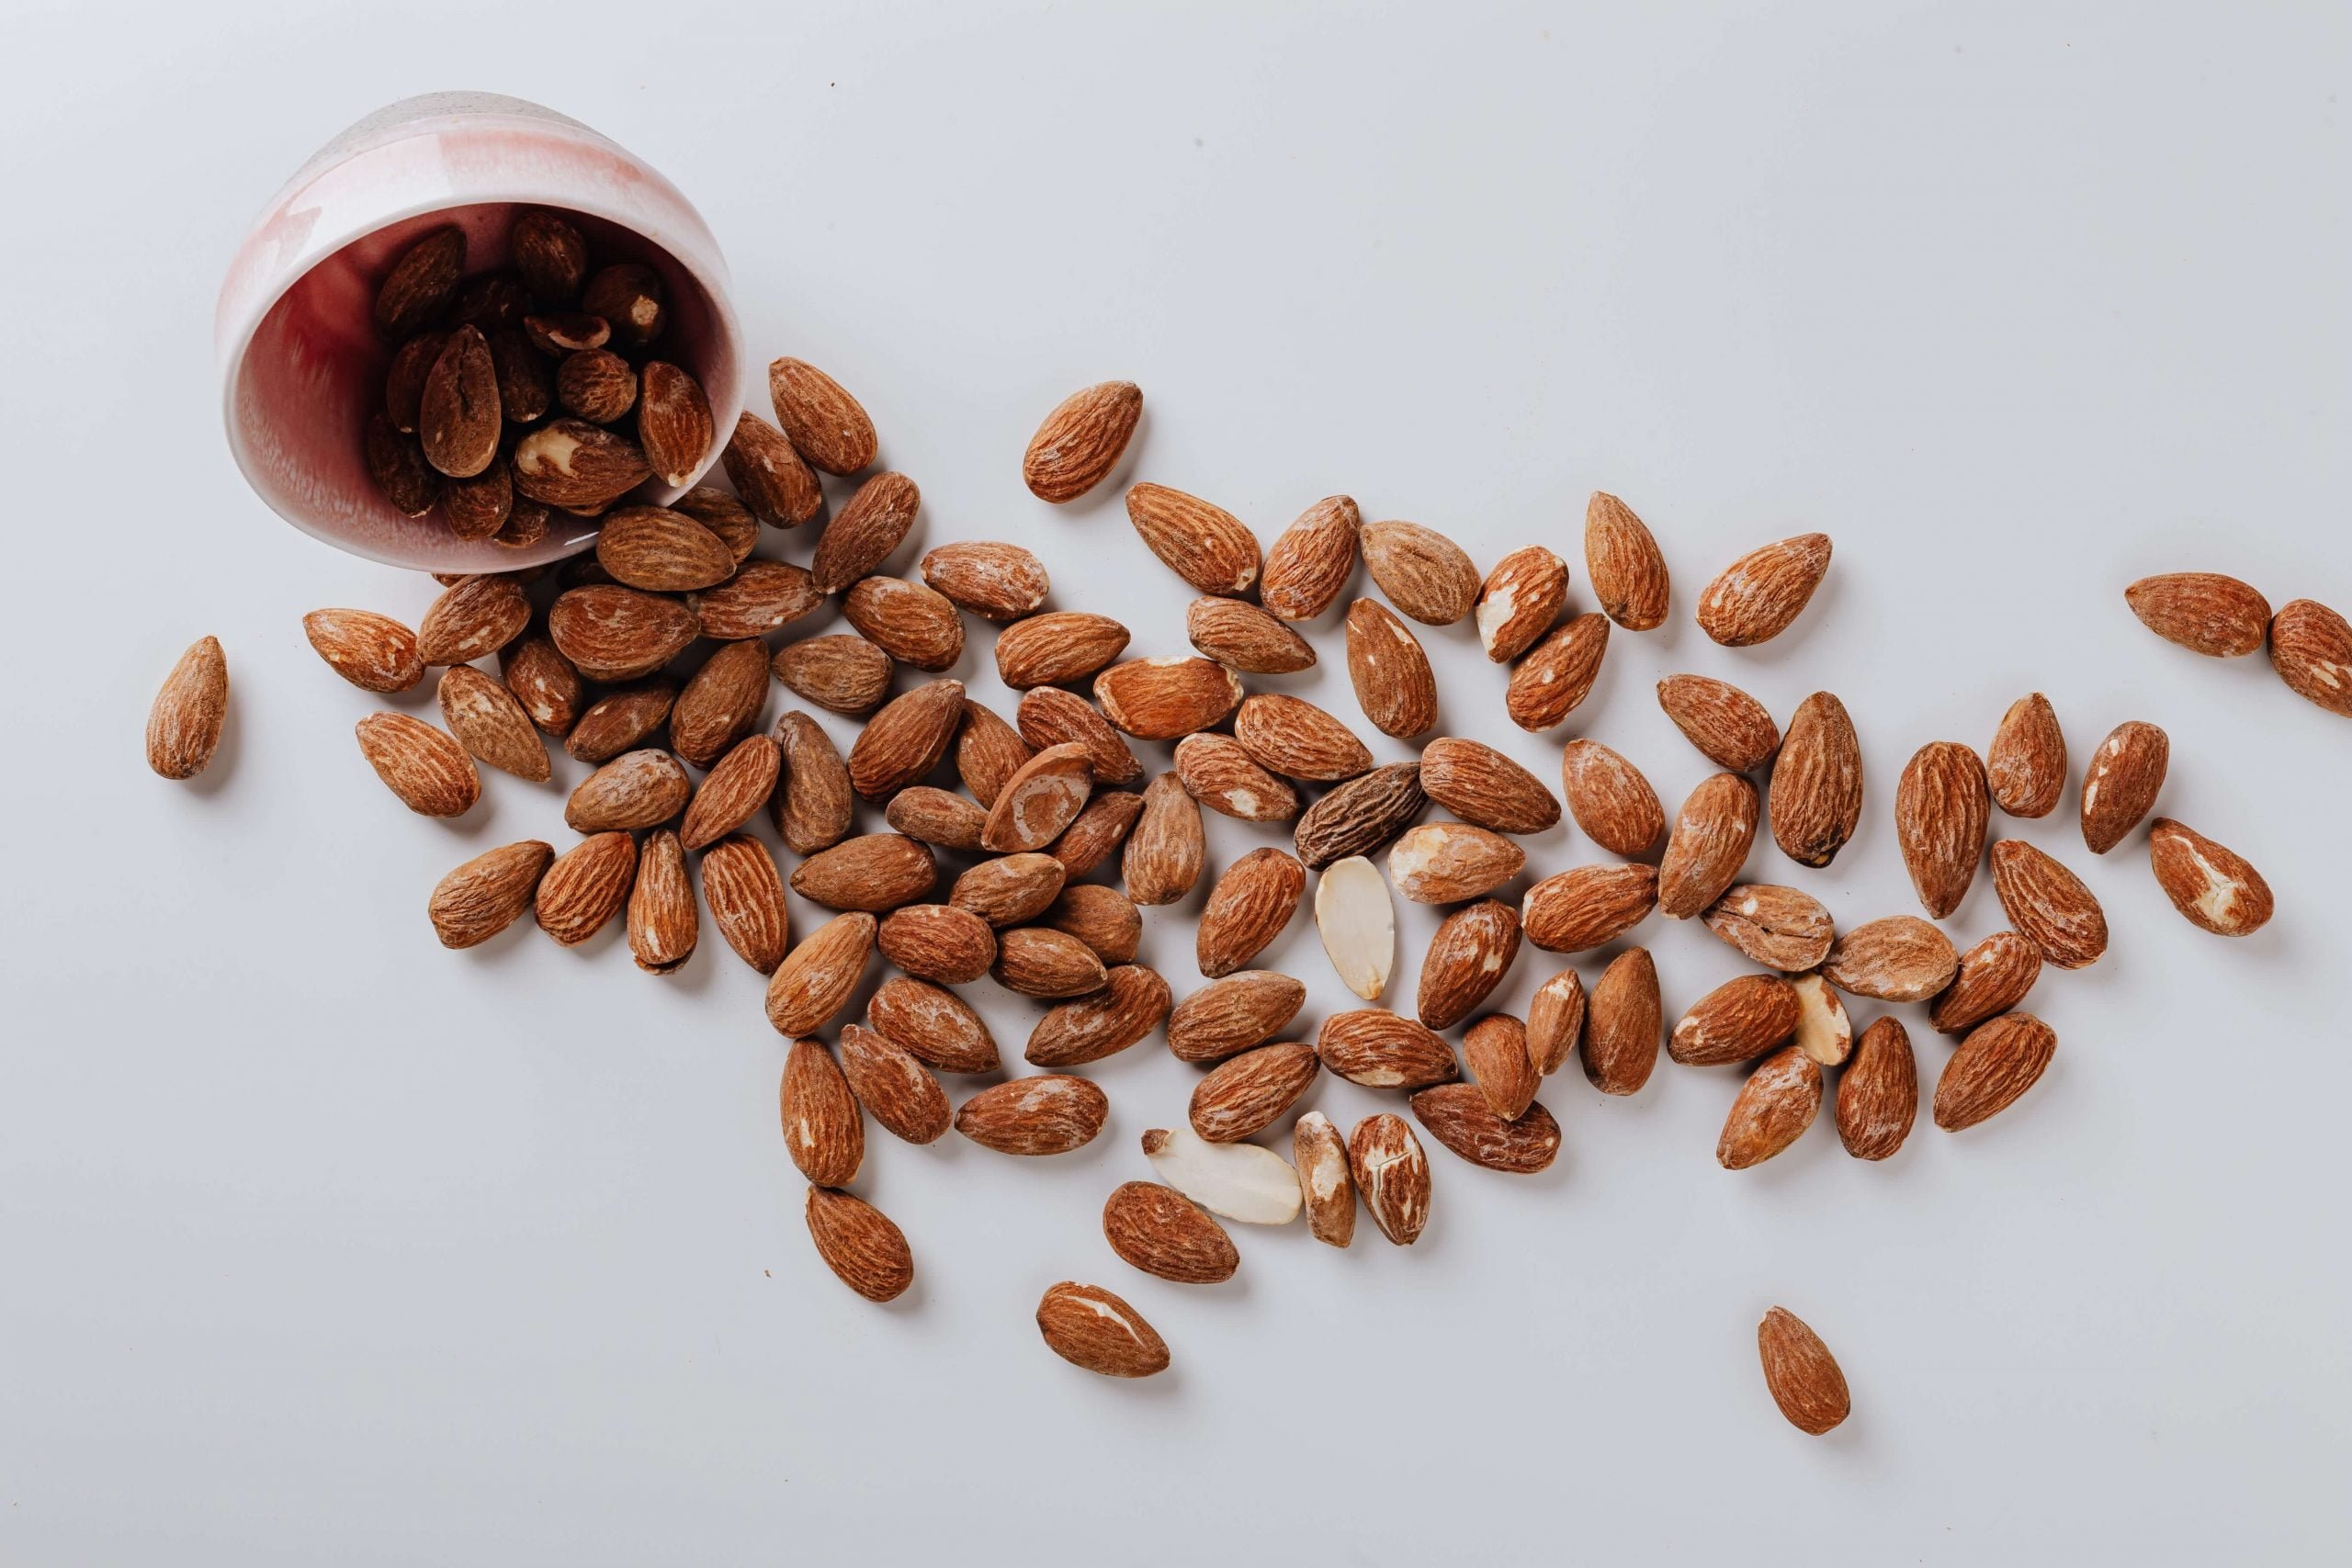 6 Benefits Of Almond Milk